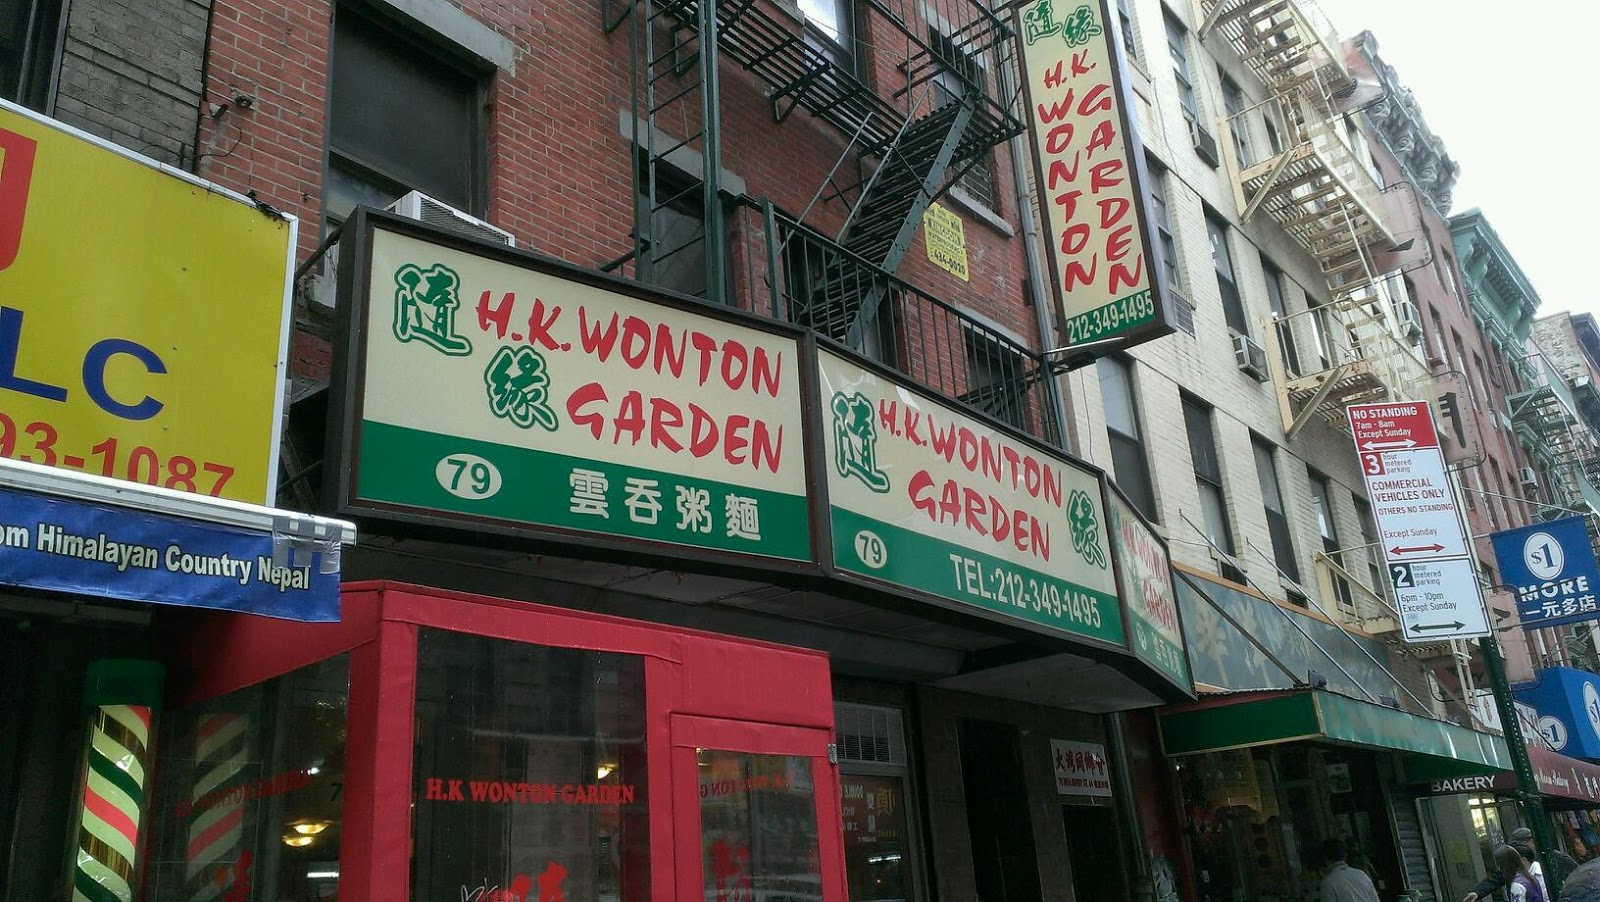 Photo of H K Wonton Garden in New York City, New York, United States - 2 Picture of Restaurant, Food, Point of interest, Establishment